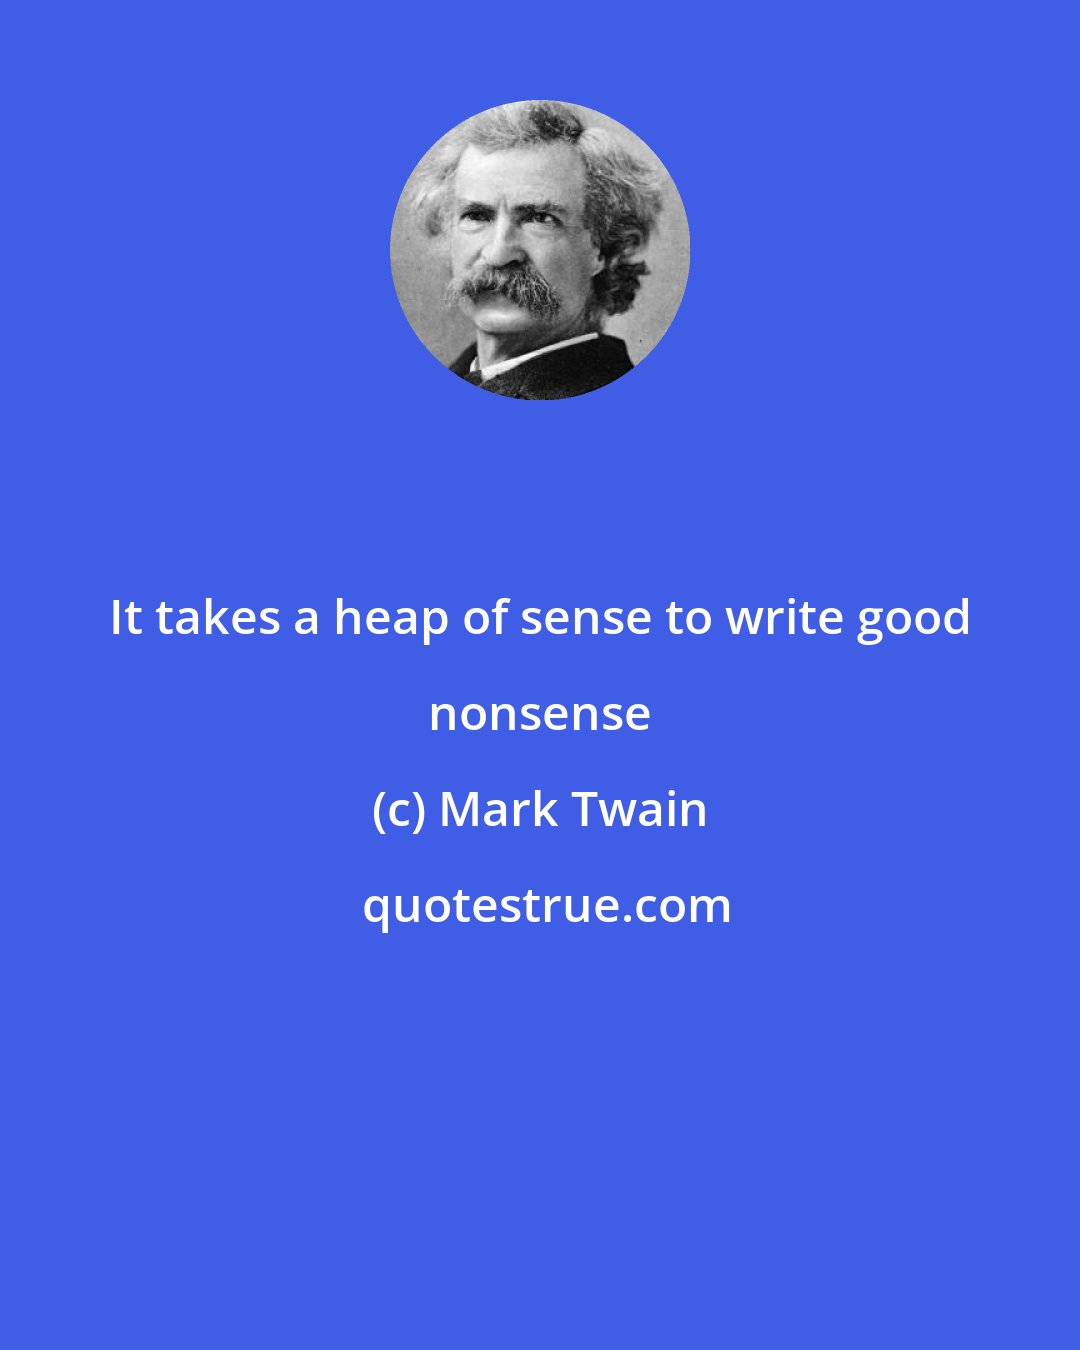 Mark Twain: It takes a heap of sense to write good nonsense